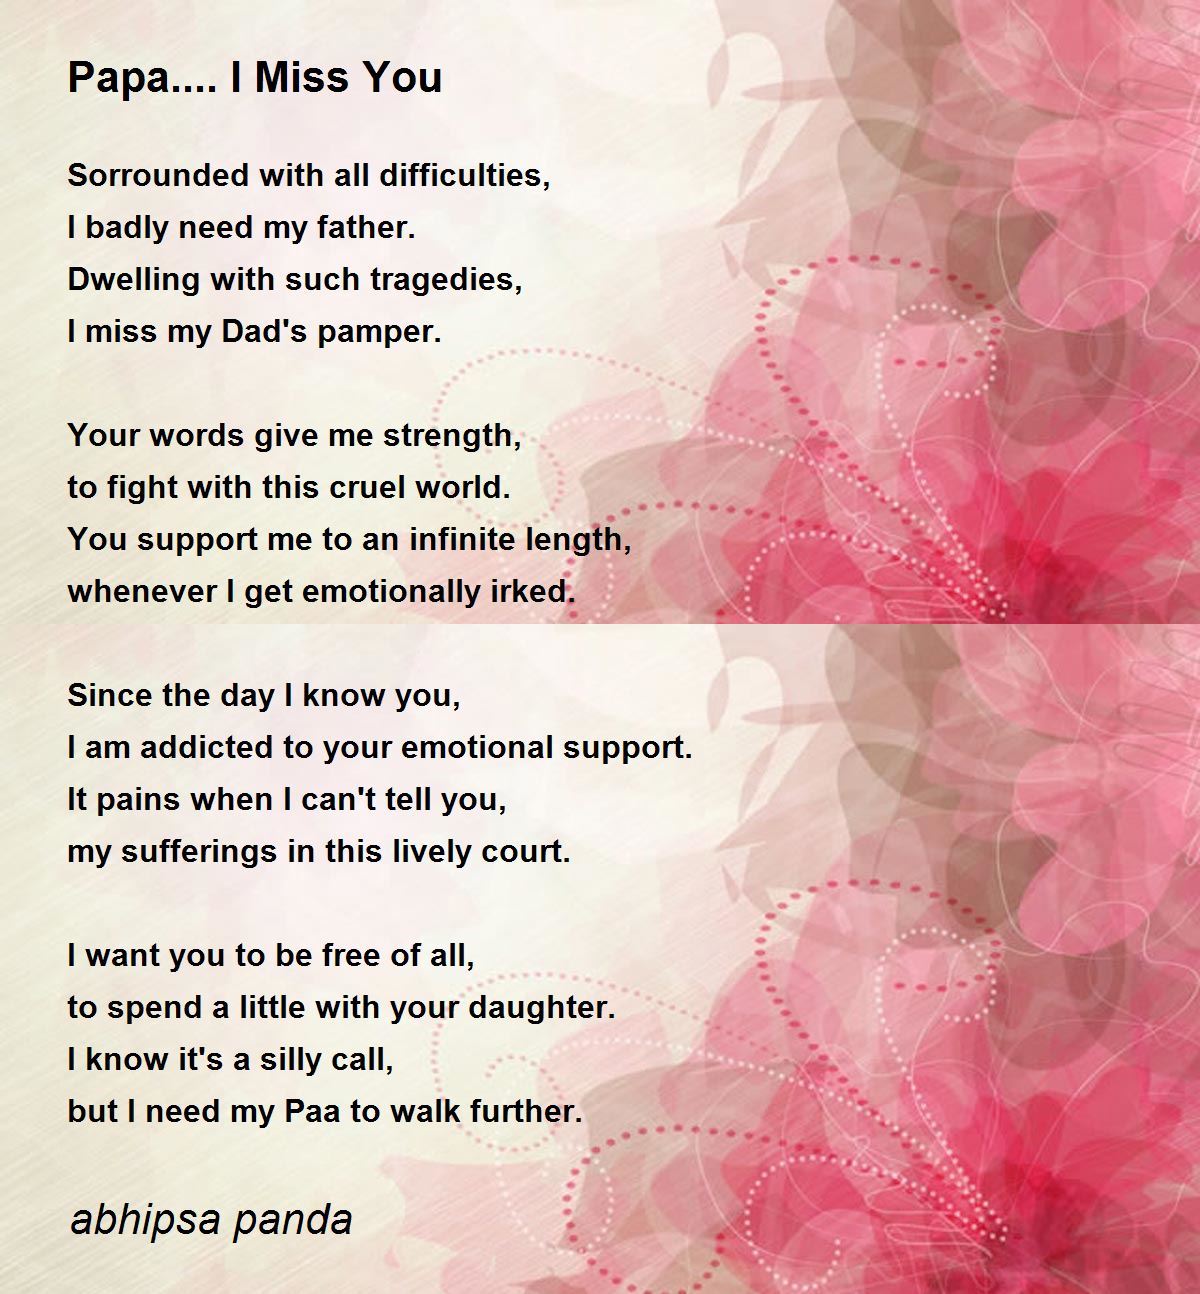 Papa.... I Miss You - Papa.... I Miss You Poem by abhipsa panda